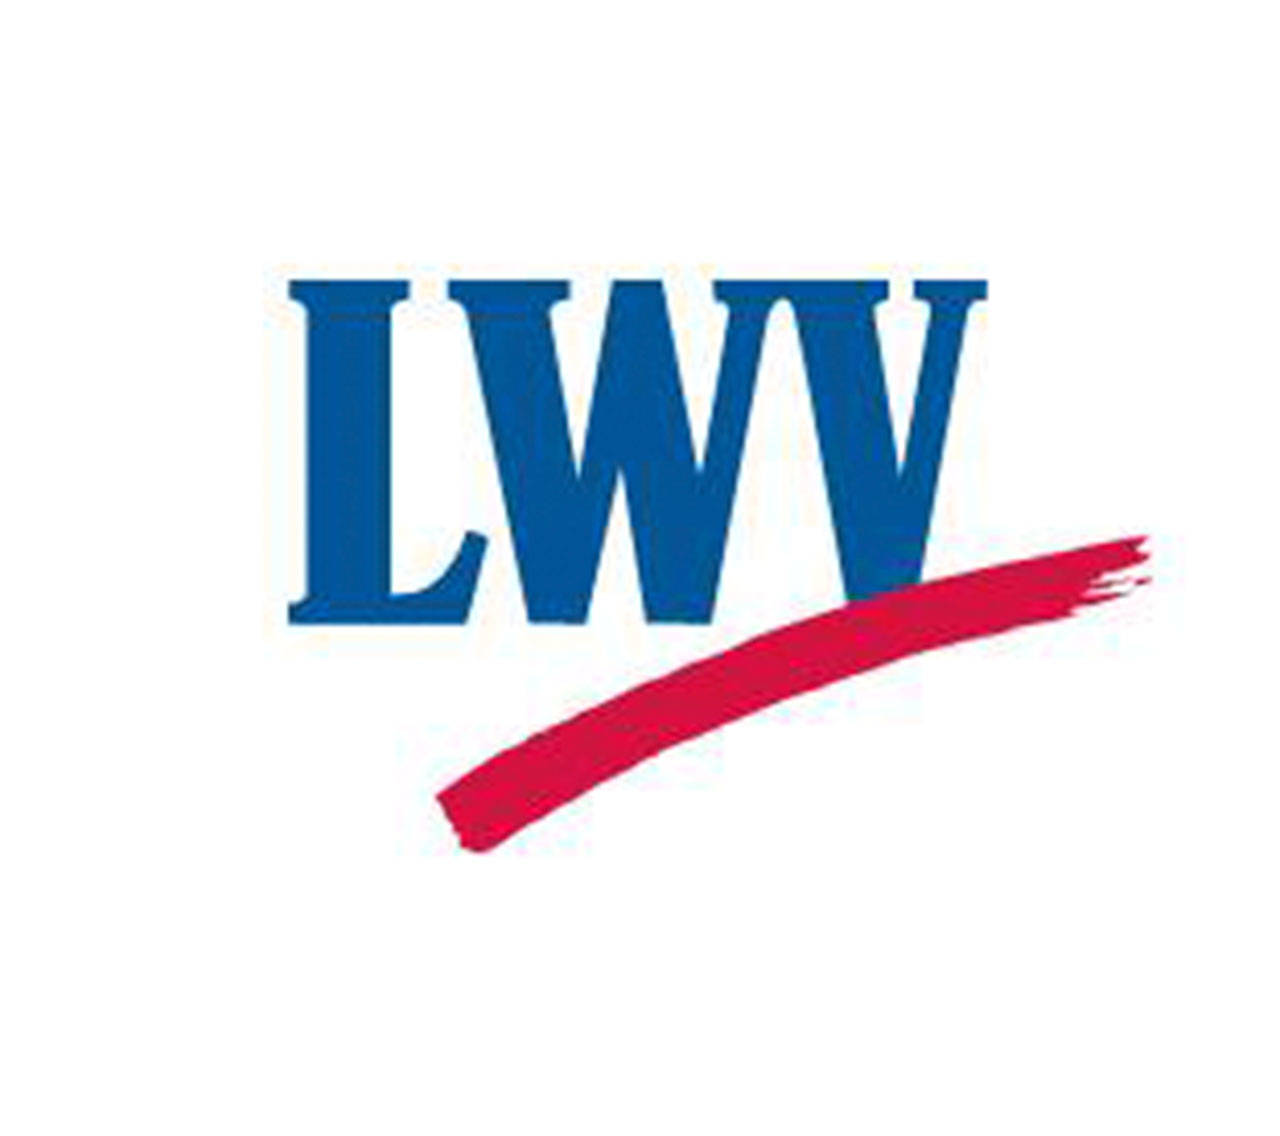 LWVSJ hosts affordable housing forum